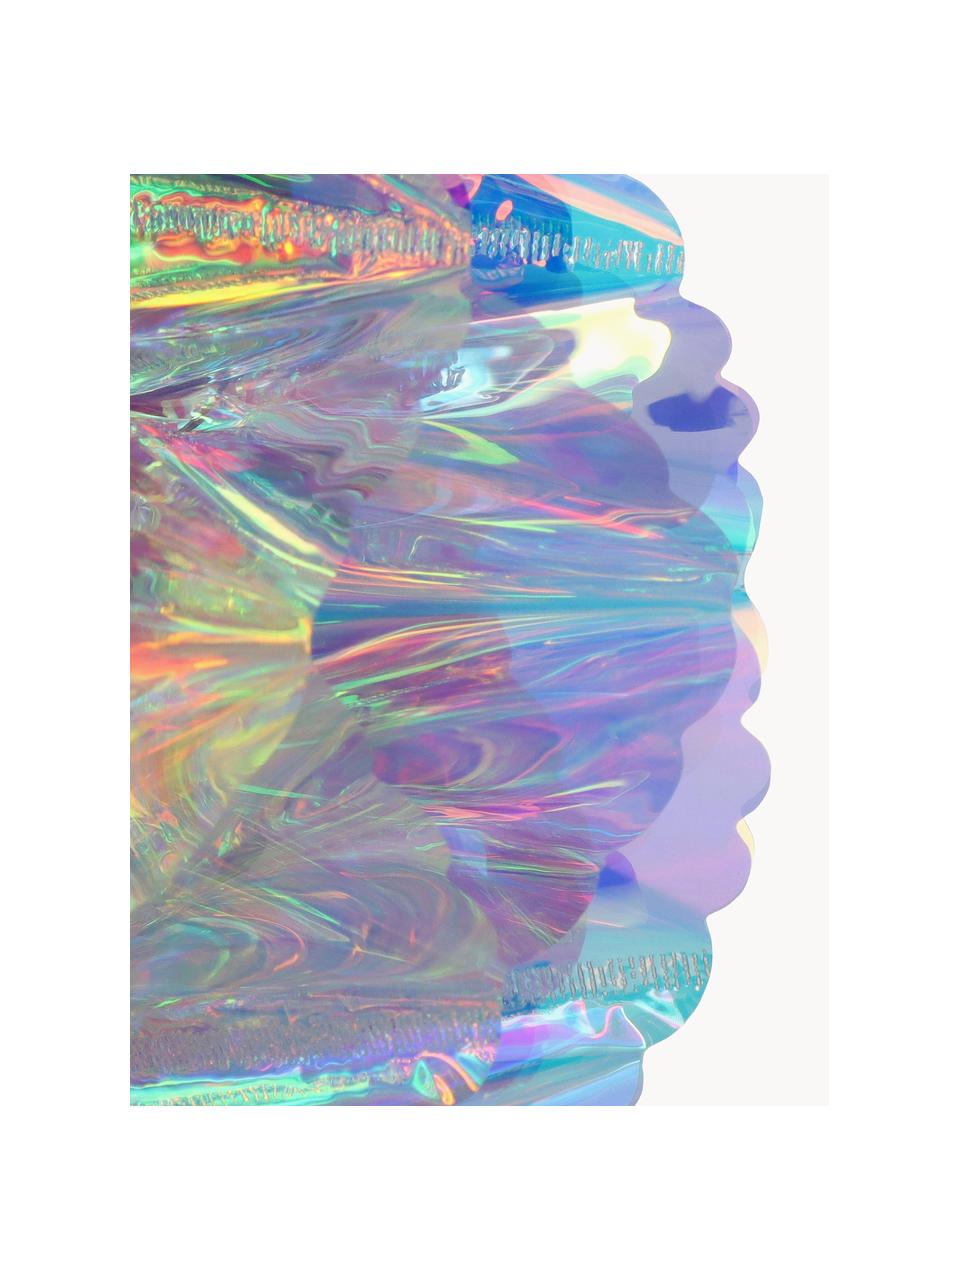 Kerstbal Iridescent, Kunststof, Transparant, iriserend, Ø 20 cm